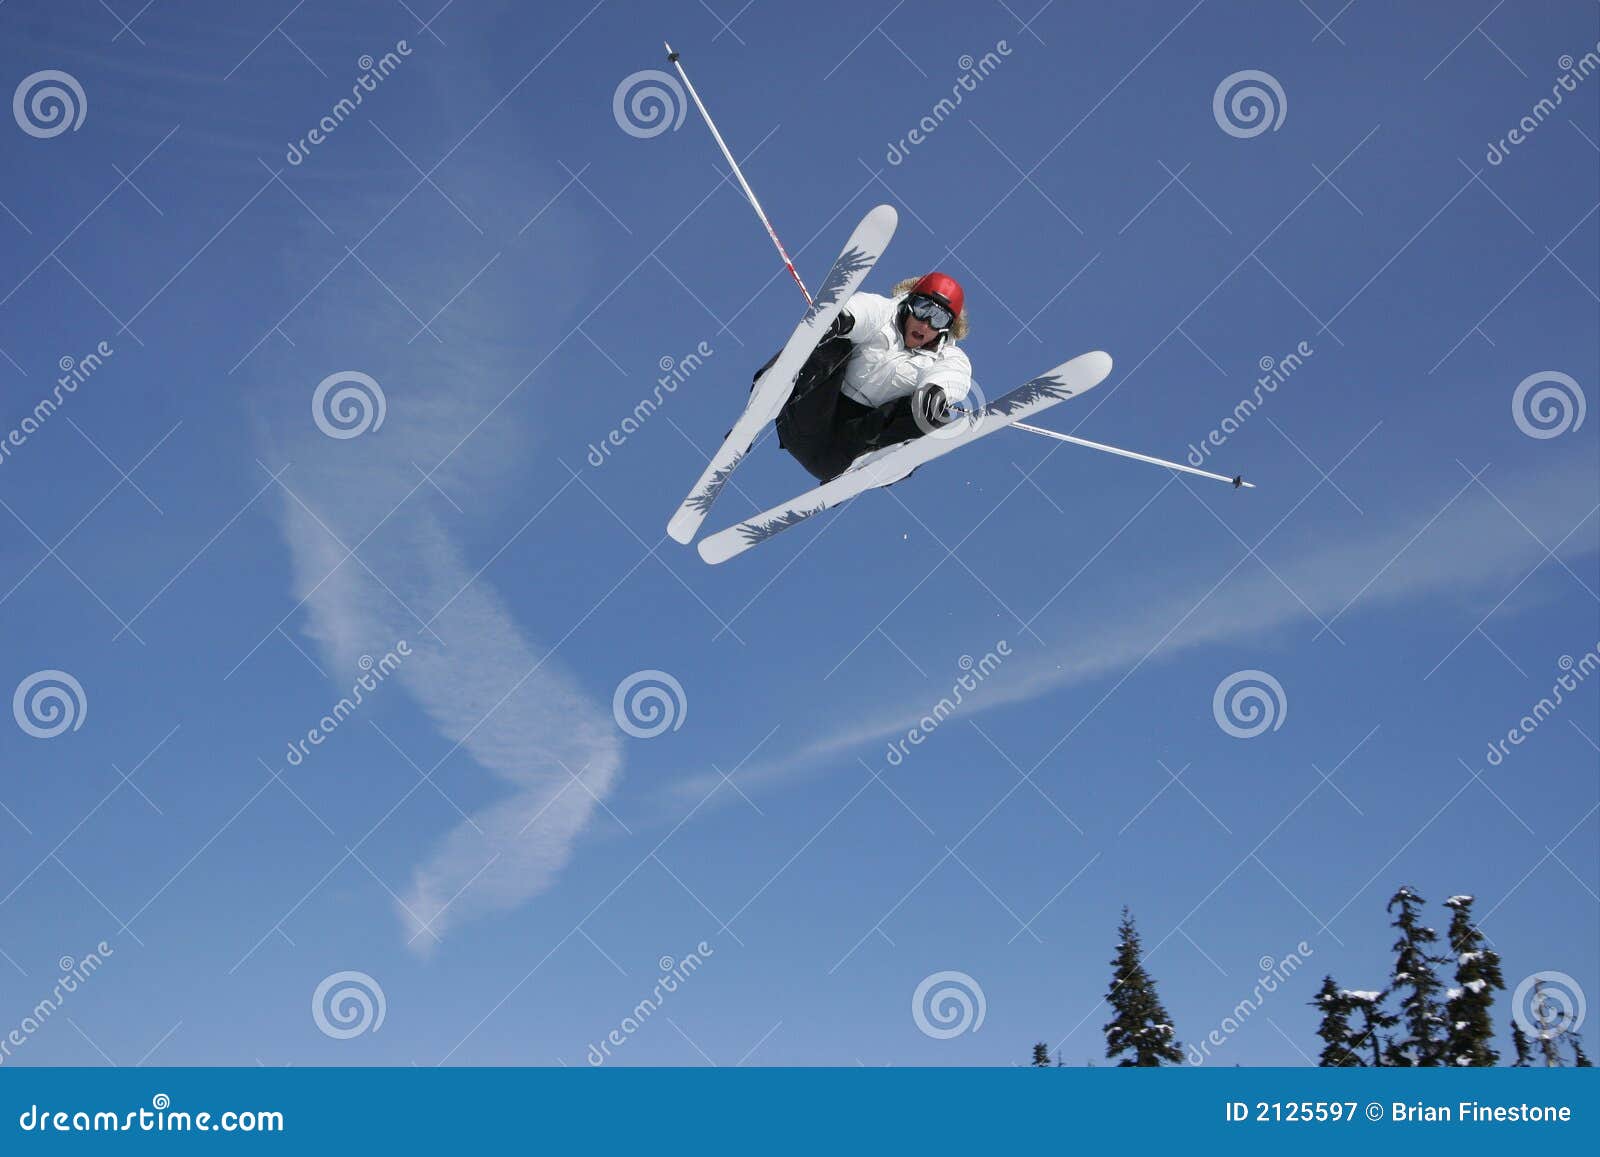 Jetstream Ski Jump stock image